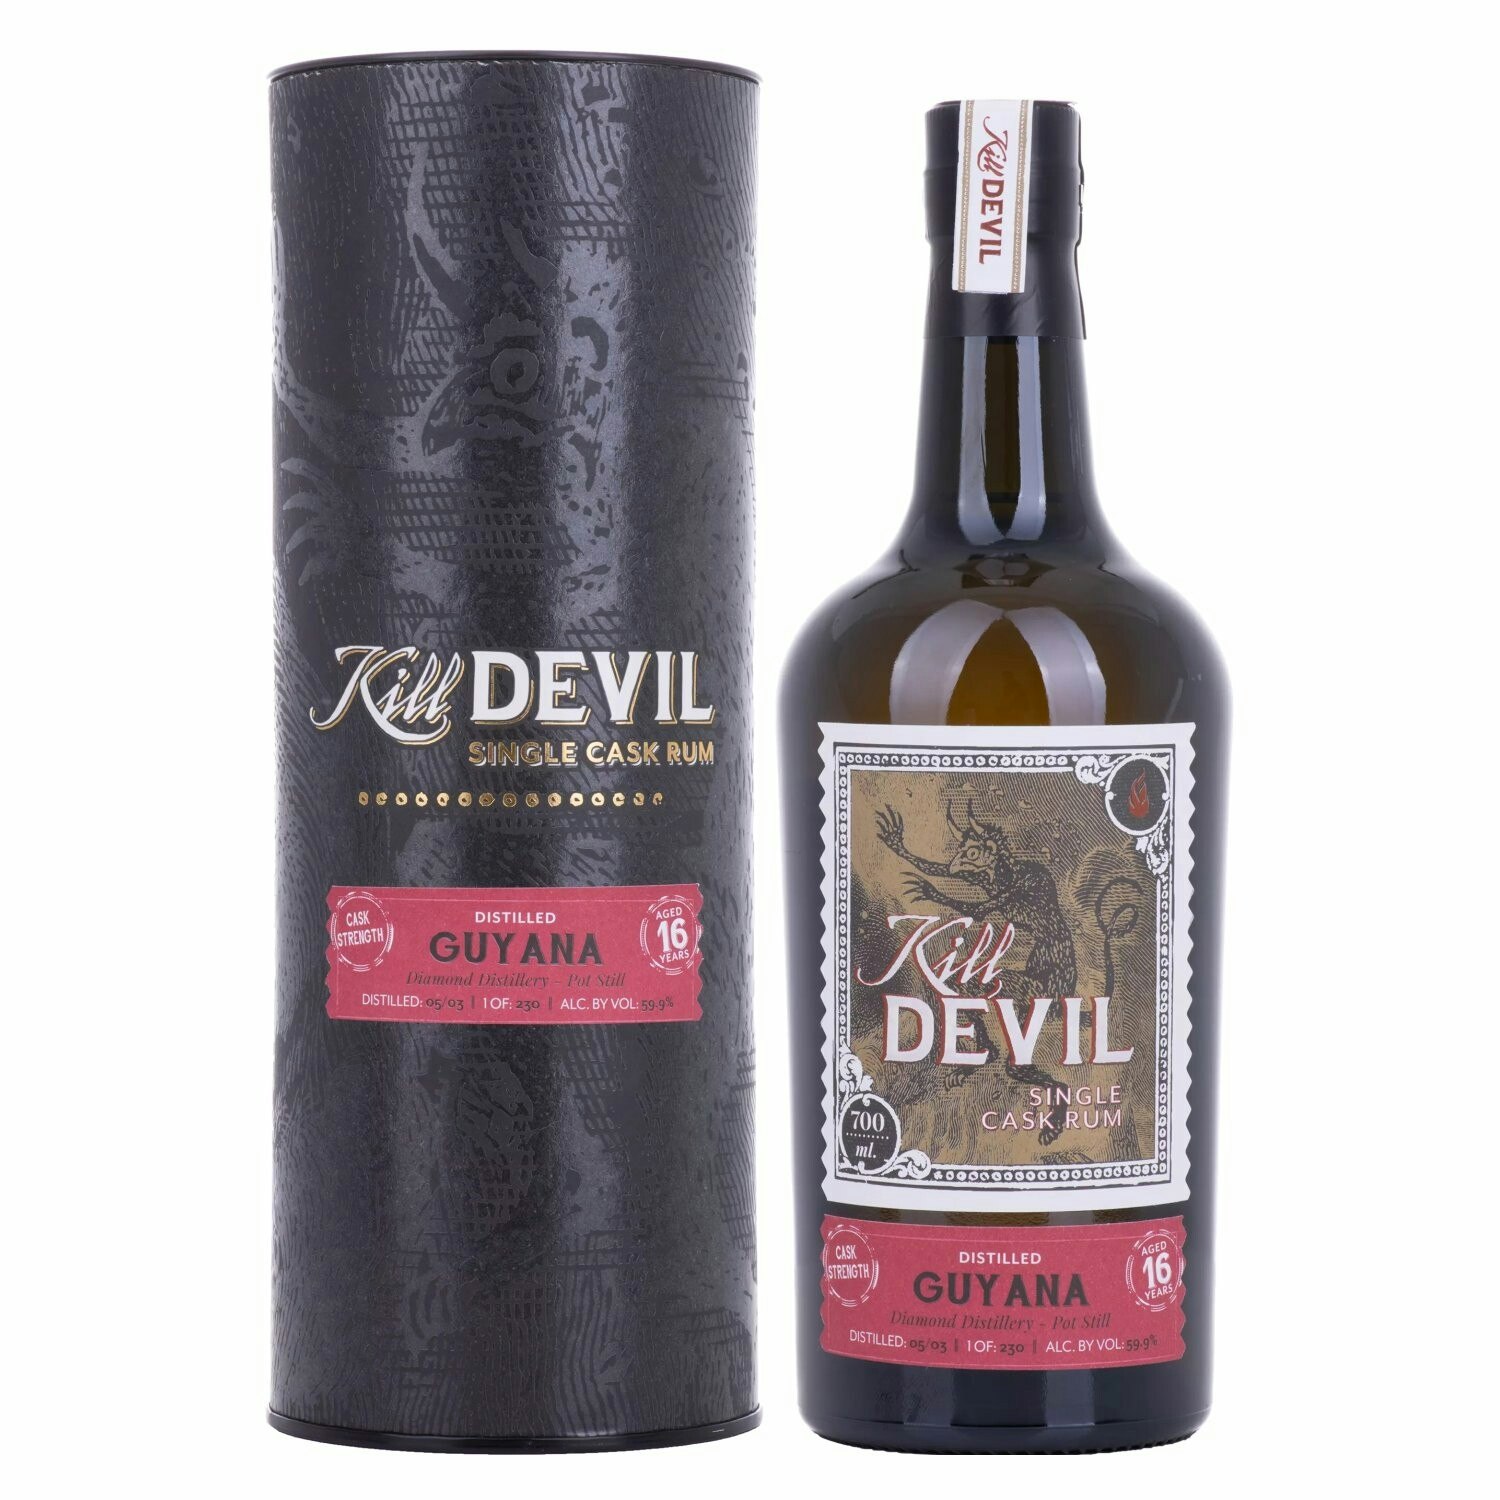 Hunter Laing Kill Devil Guyana 16 Years Old Single Cask Rum 2003 59,9% Vol. 0,7l in Giftbox